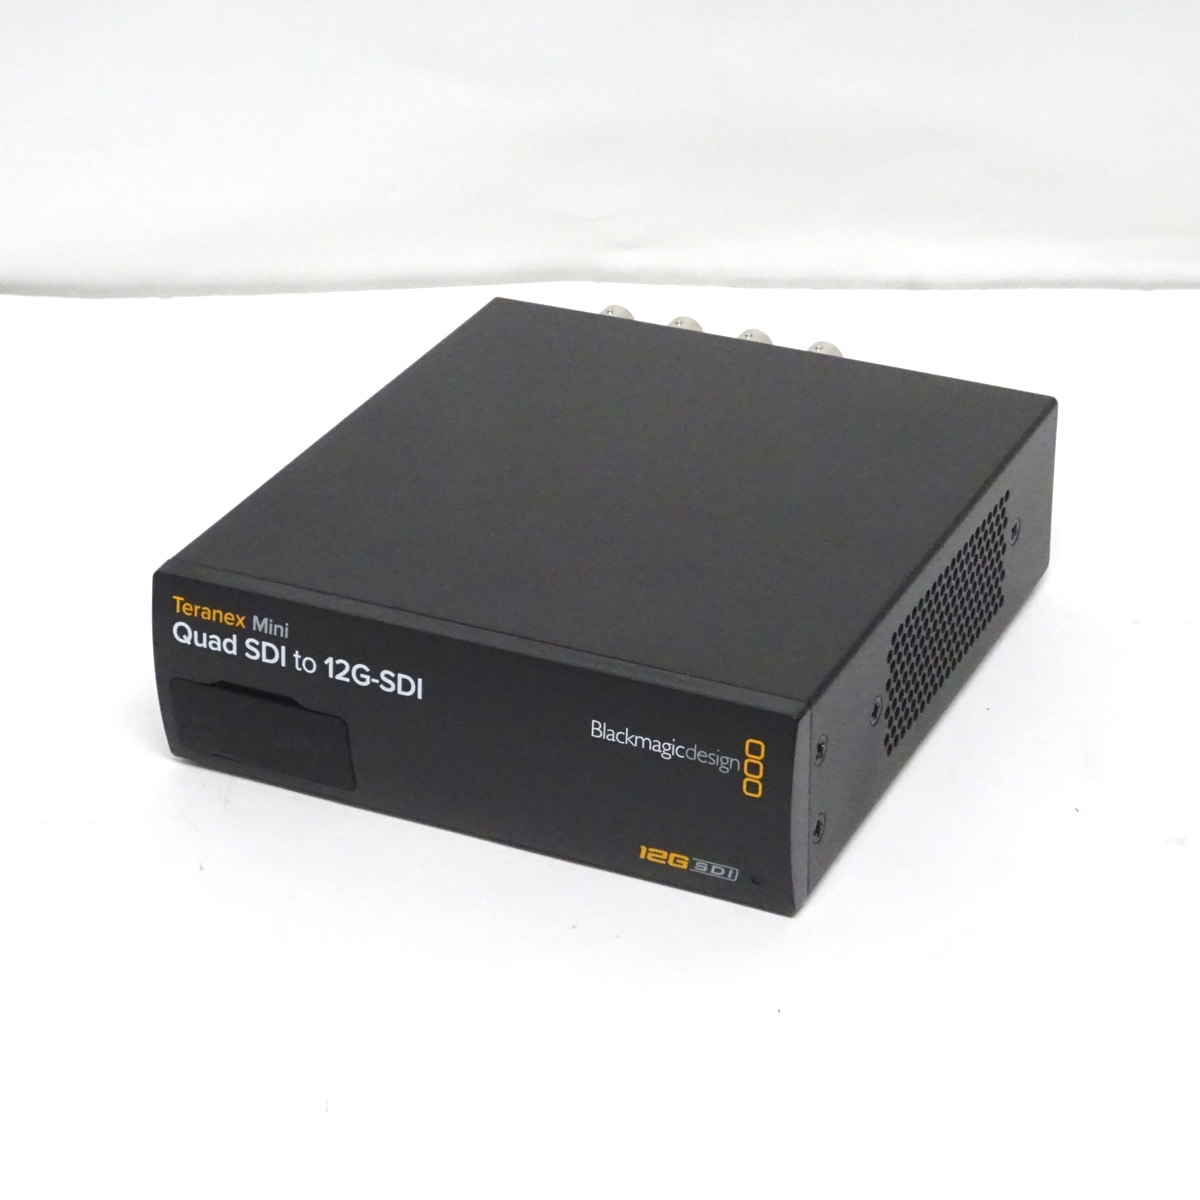 【中古】Blackmagic Design Teranex Mini Quad SDI to 12G-SDI コンバーター【愛知発送1】